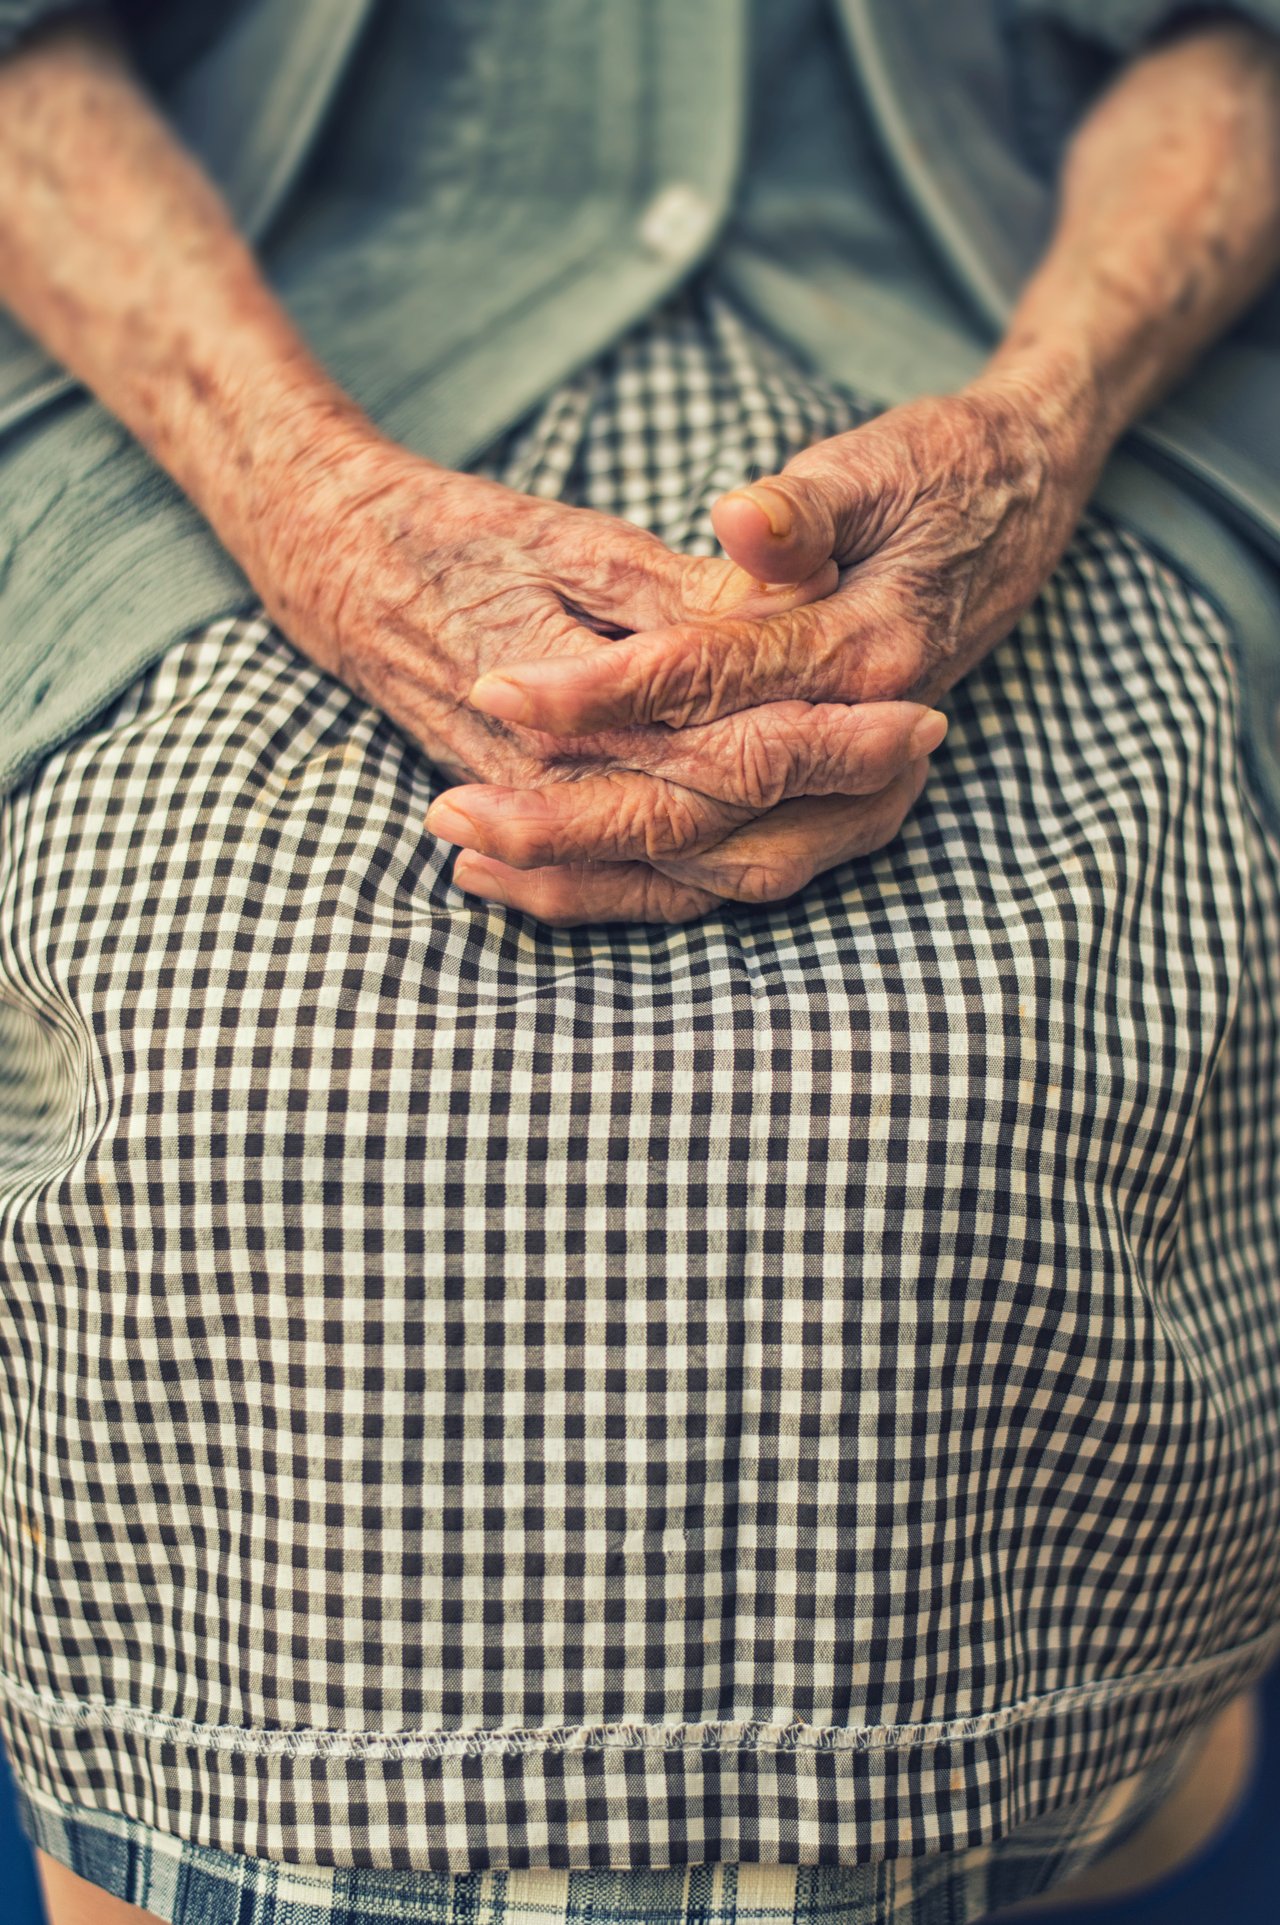 Öreg hölgy, nagymama, idős, kor, öregség, öregedés - Fotó: Unsplash/Danie Franco